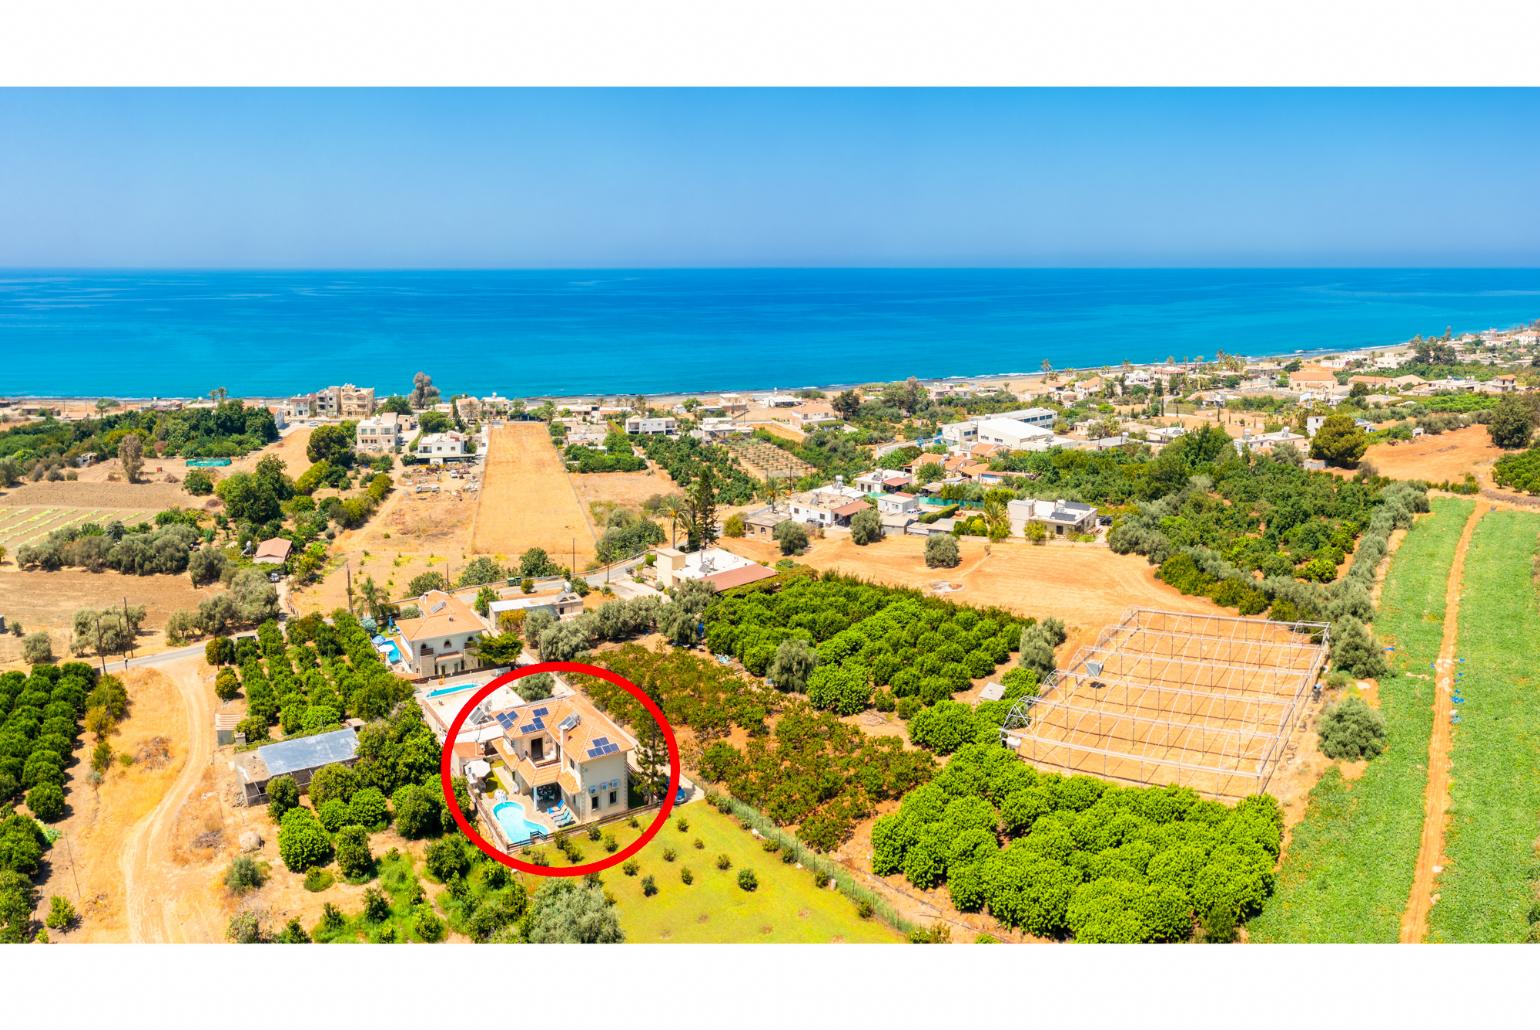 Aerial view showing location of Villa Olivetta